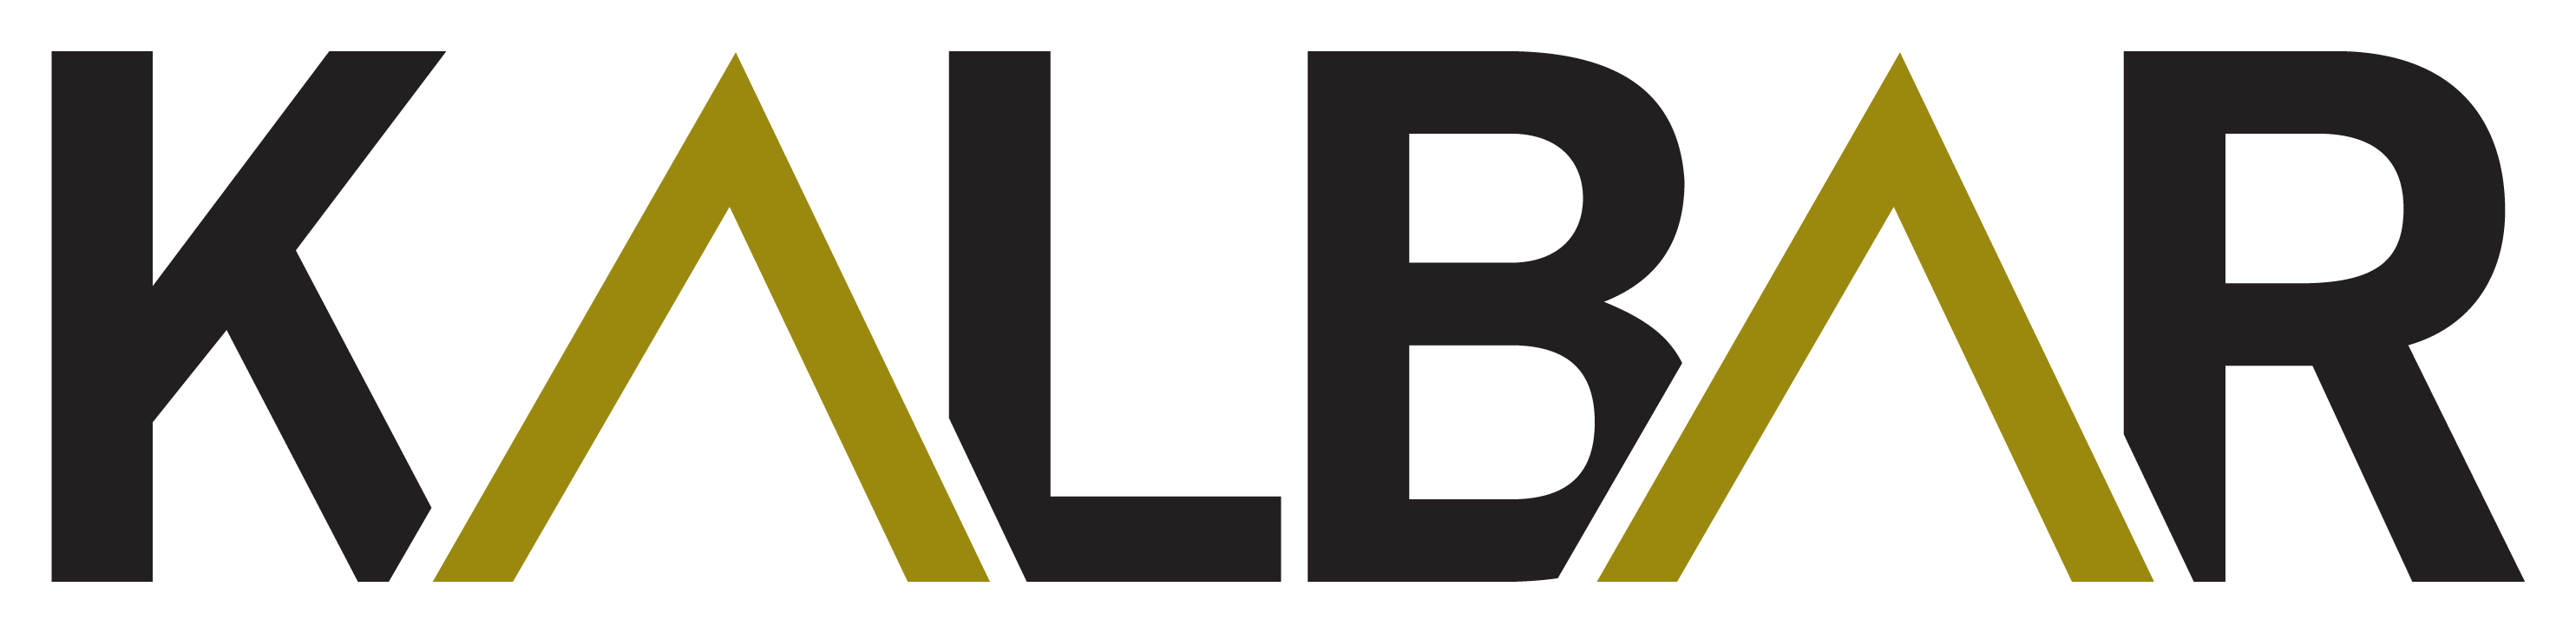 Kalbar Ltd